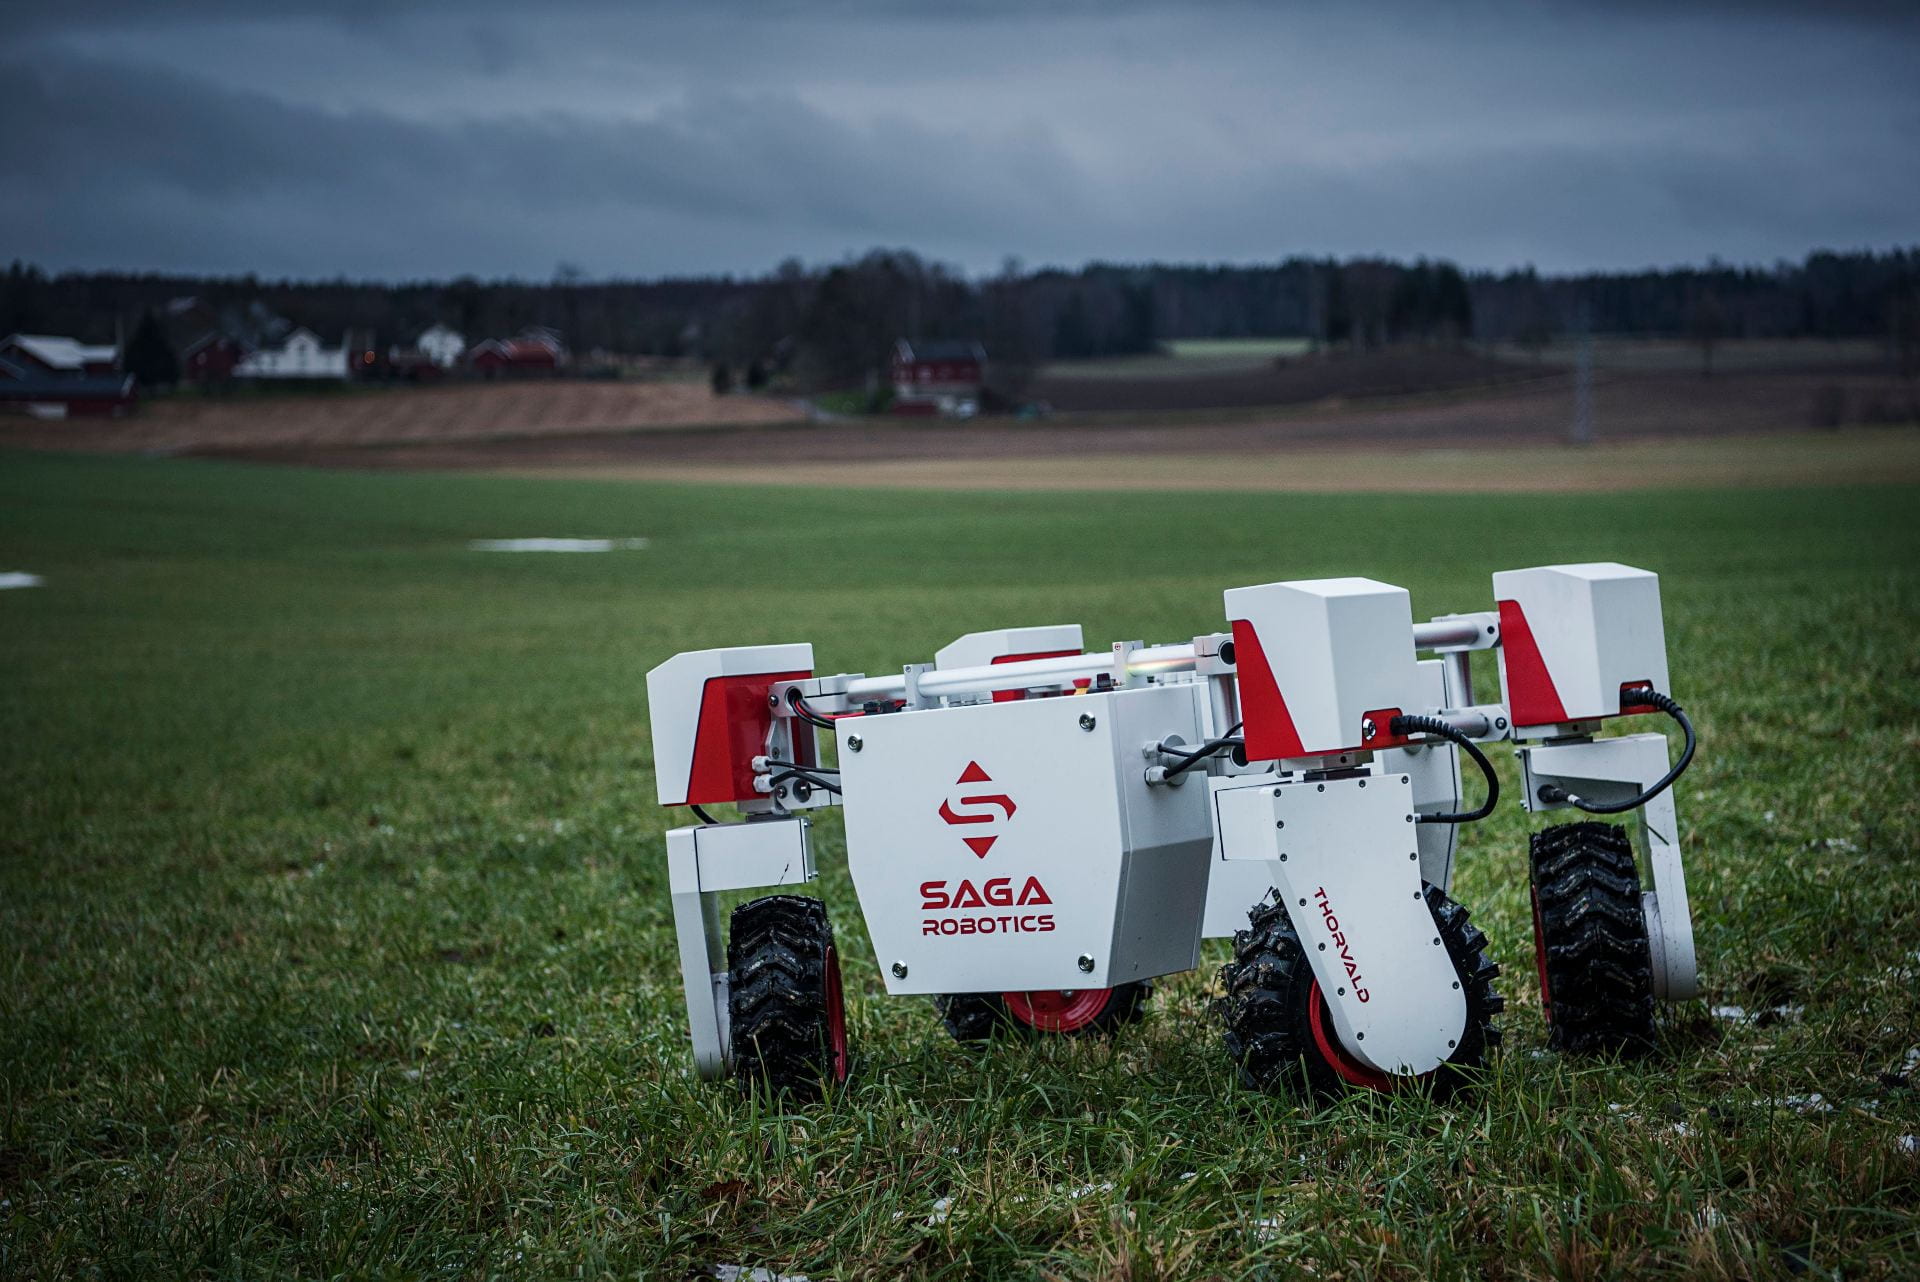 Saga robotics robot in a field.